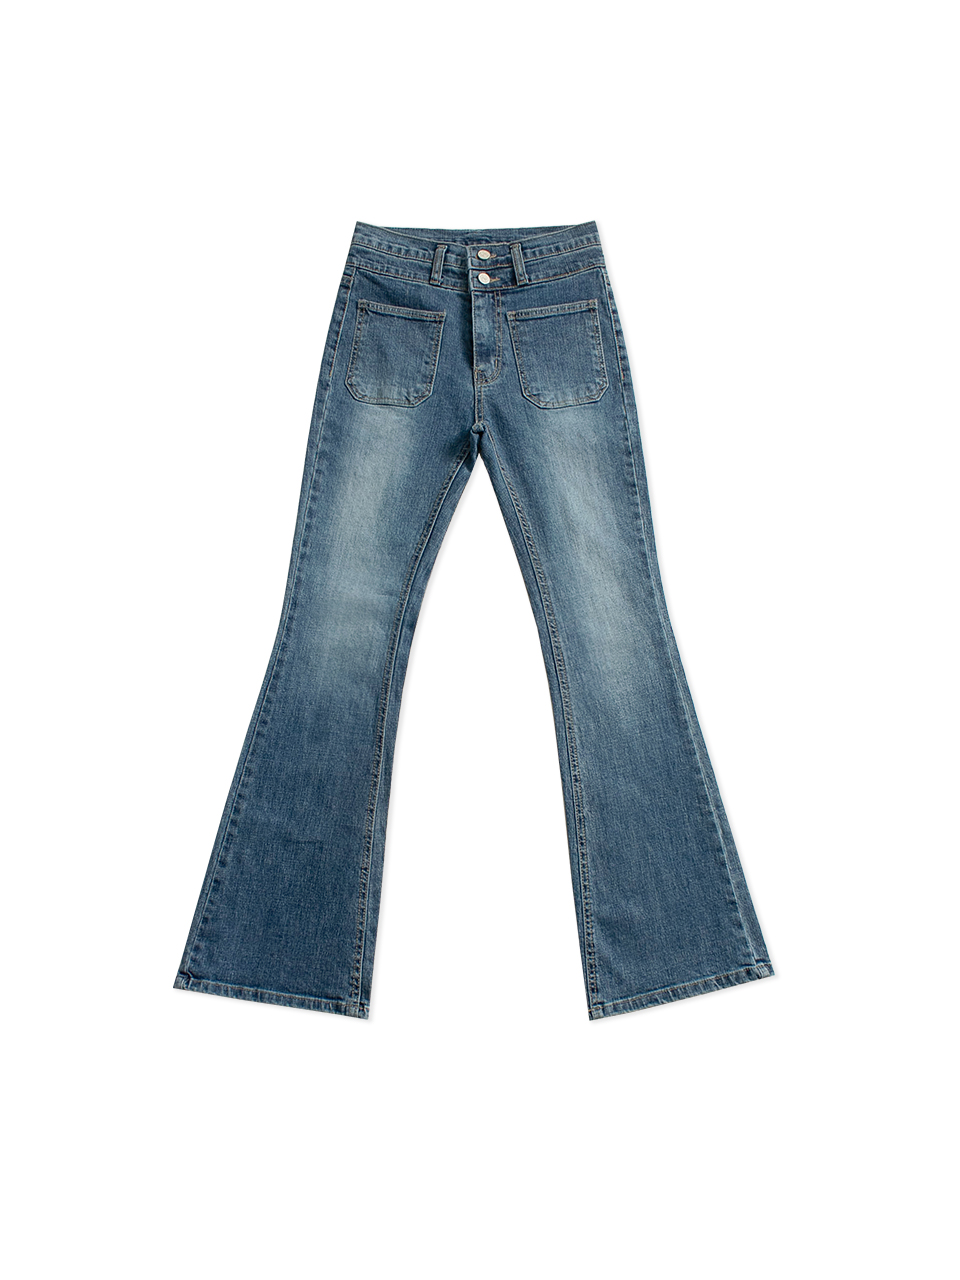 [BOOTSCUT] Ace Pocket Jeans